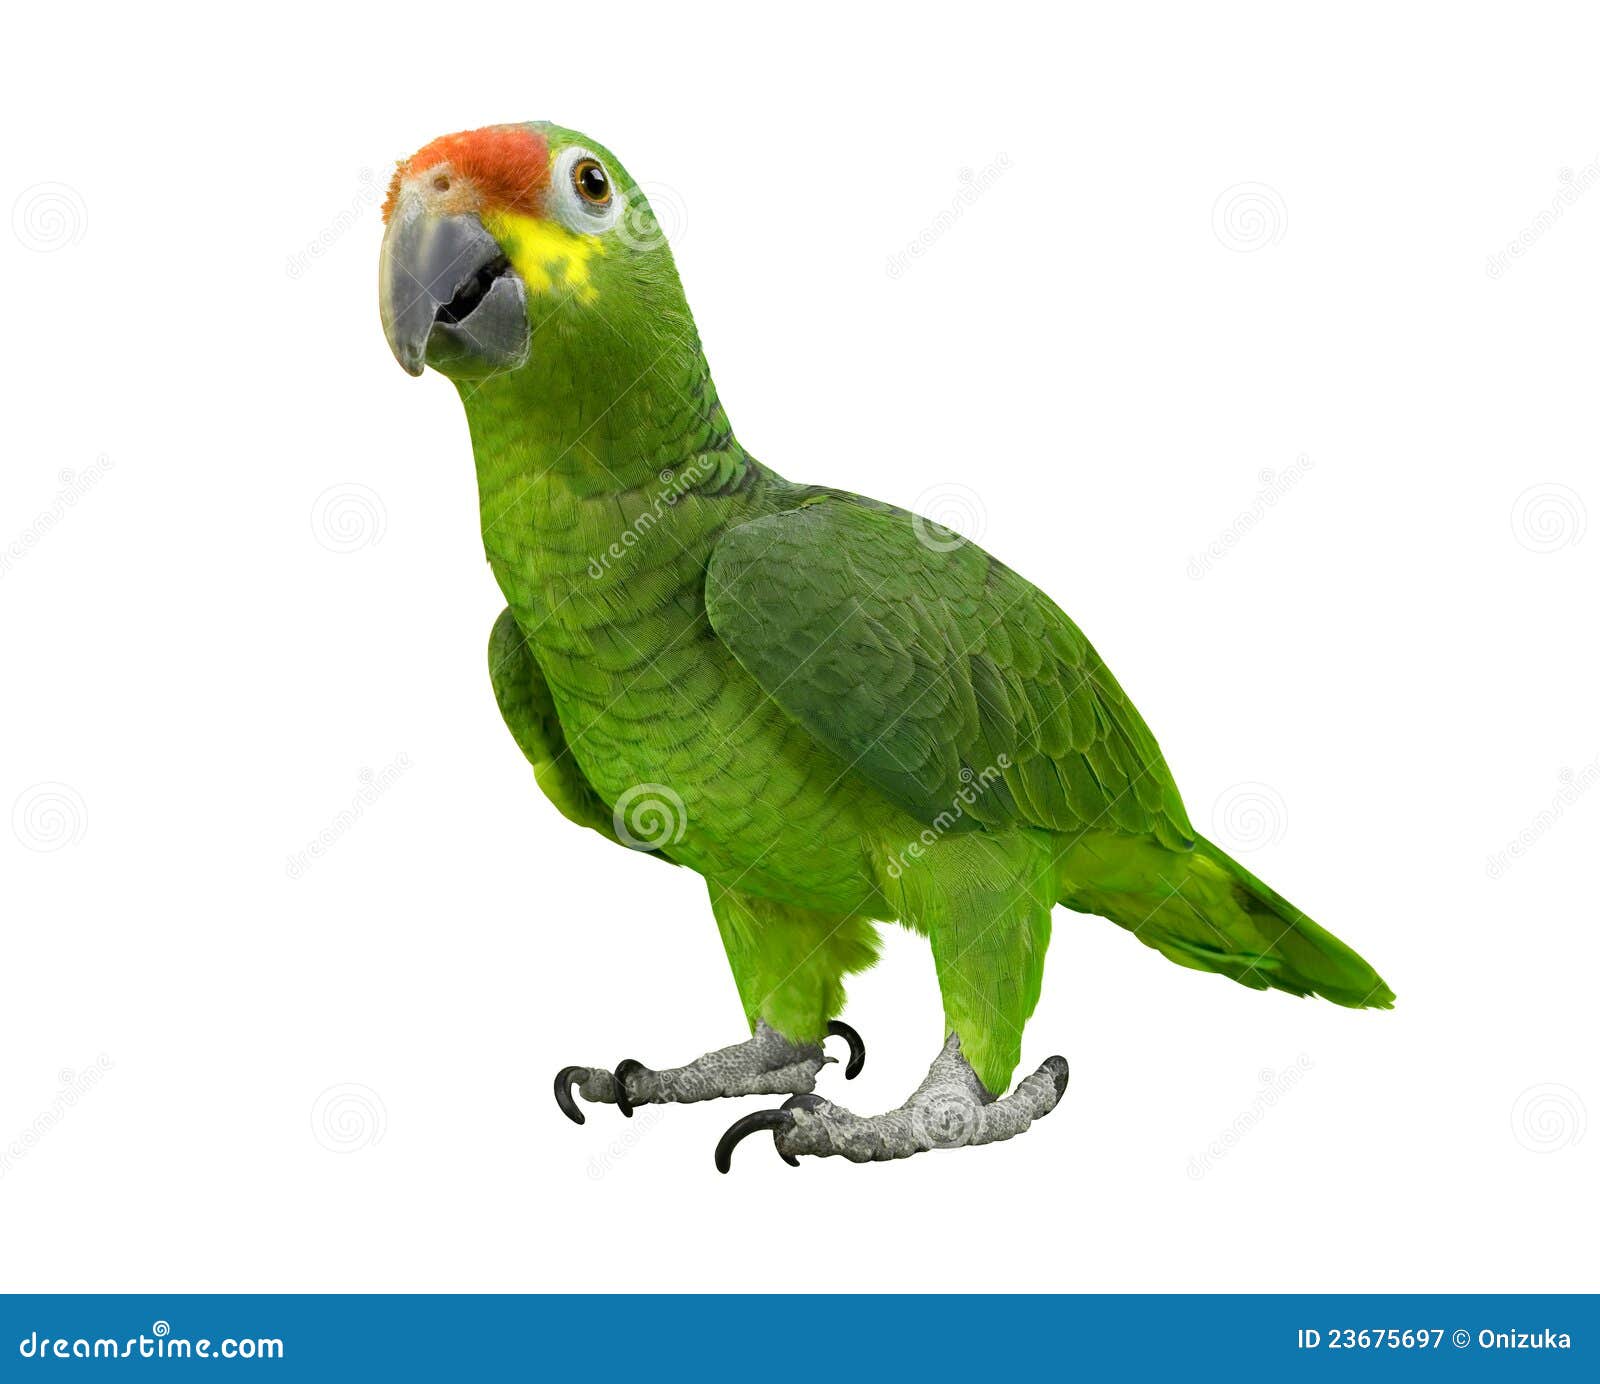 63,125 Green Parrot Stock Photos - Free & Royalty-Free Stock ...